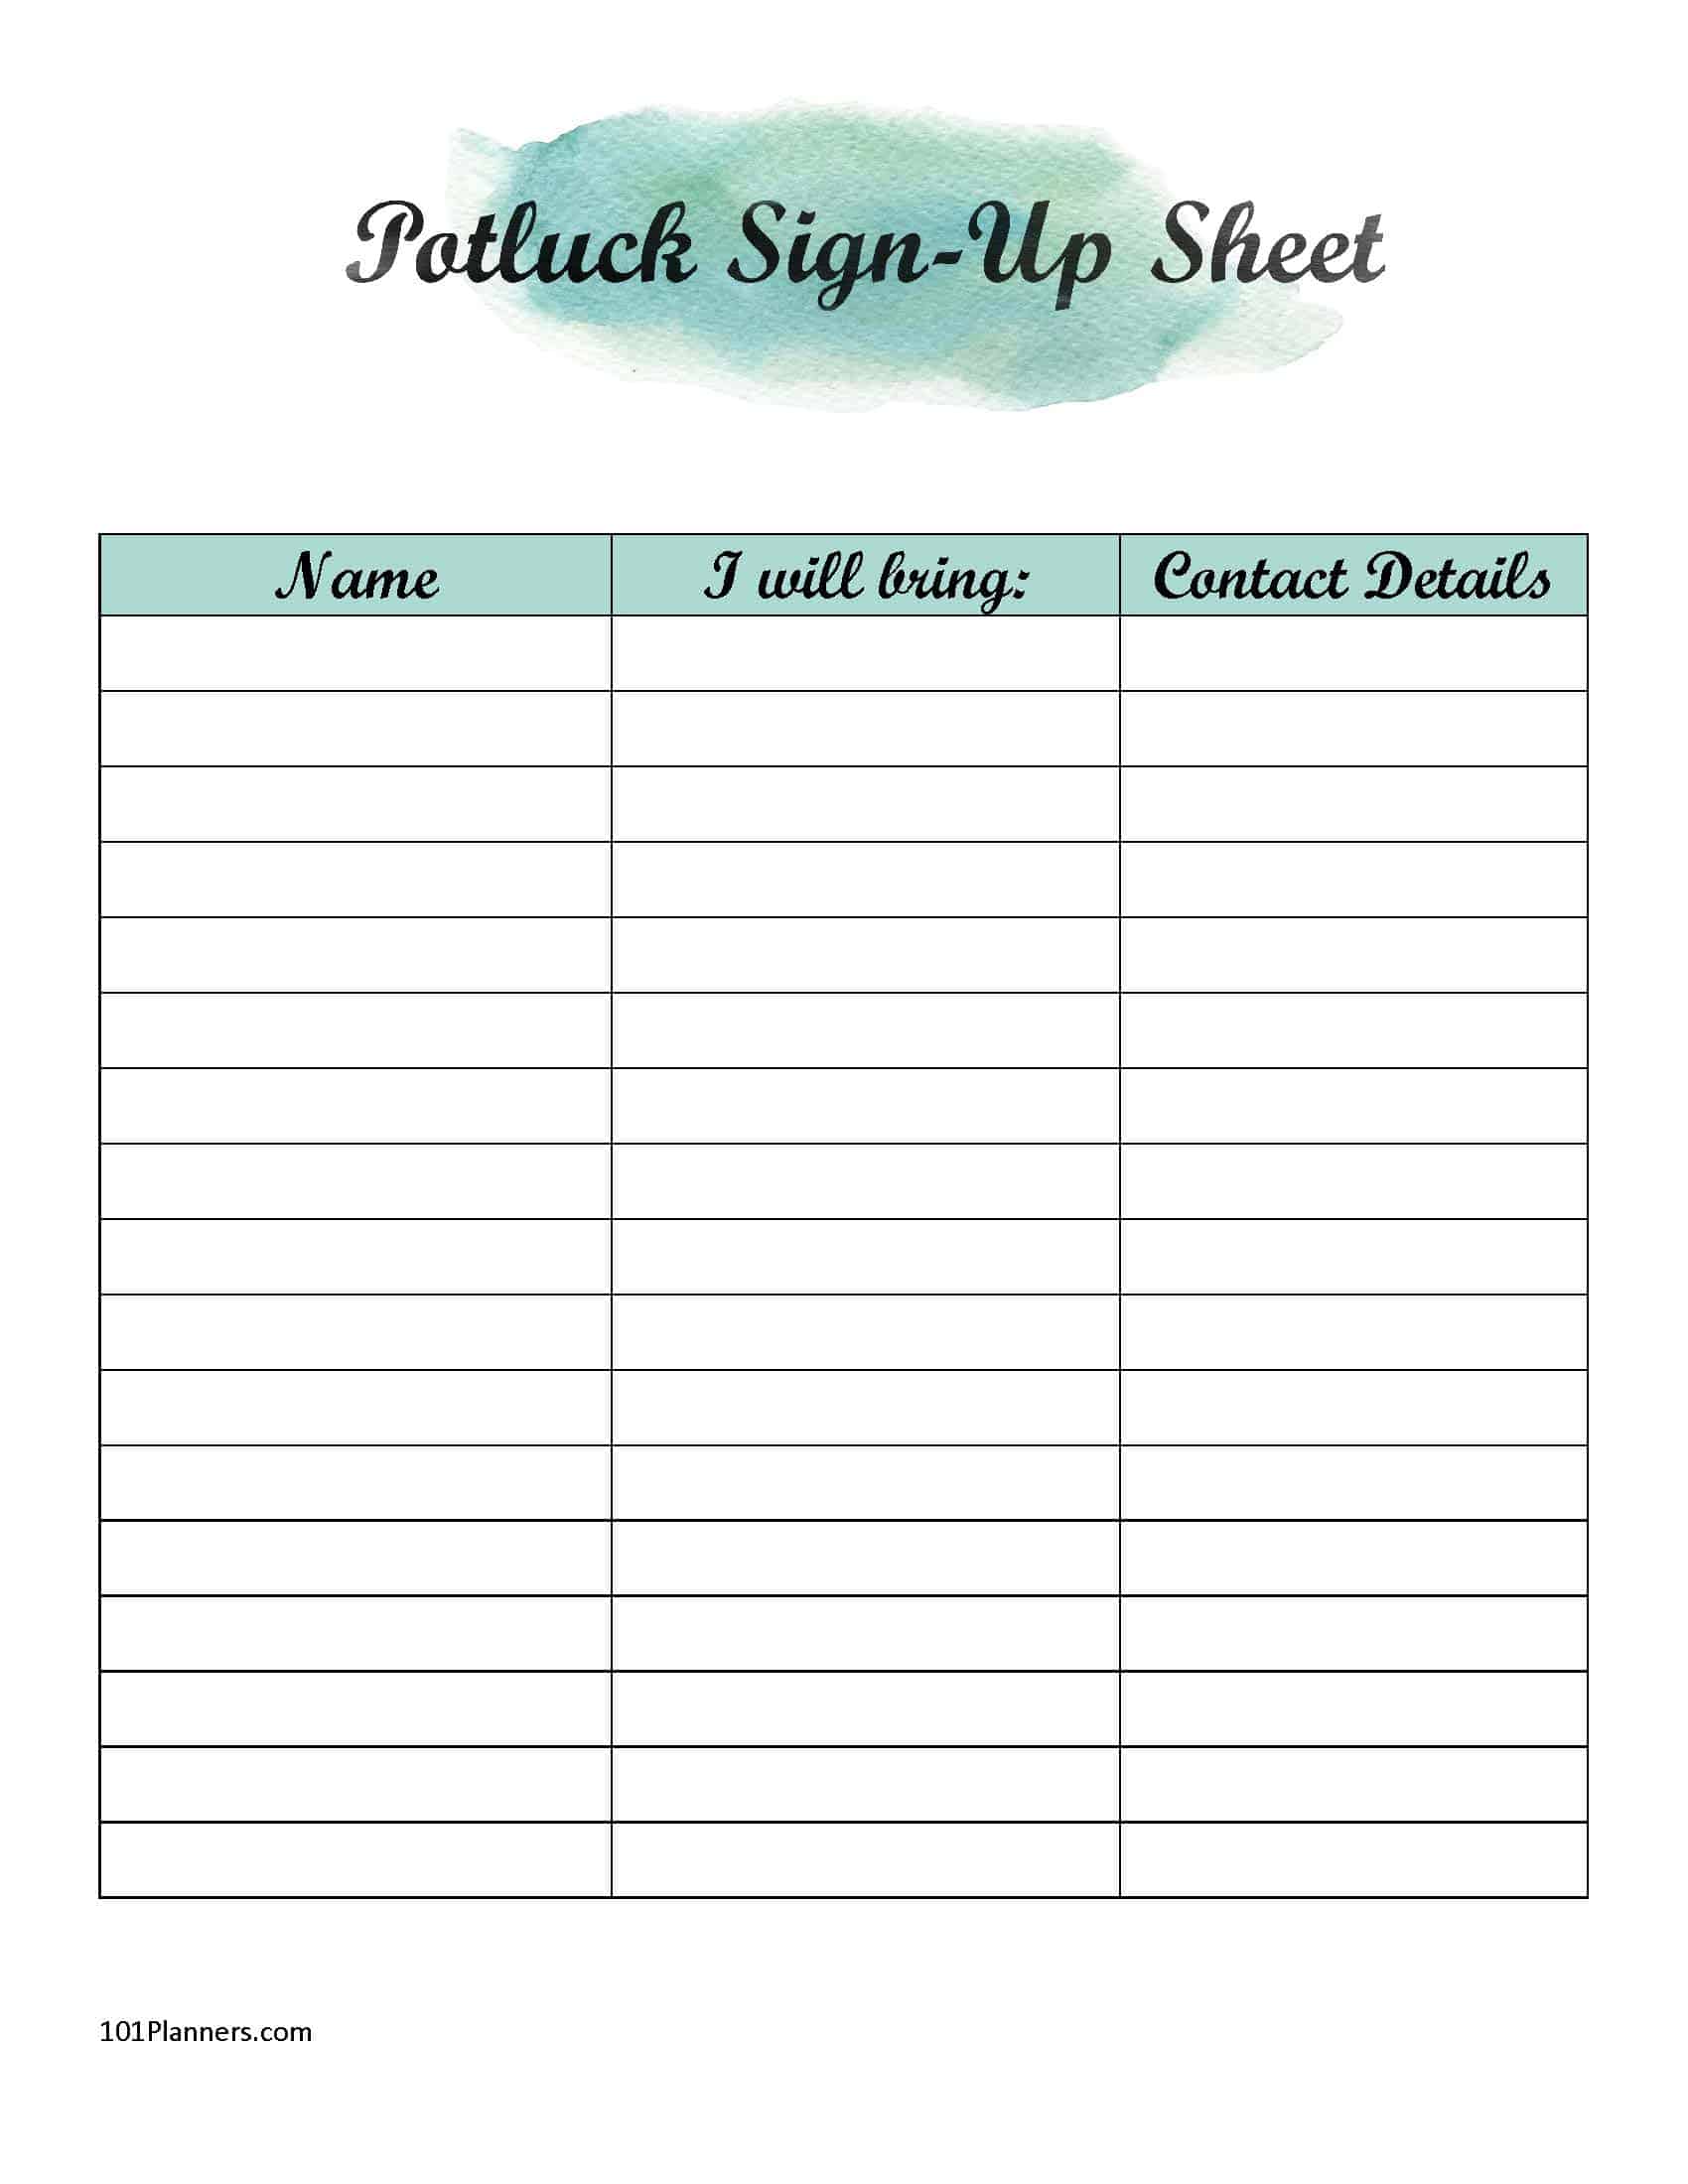 potluck-sign-up-sheet-template-free